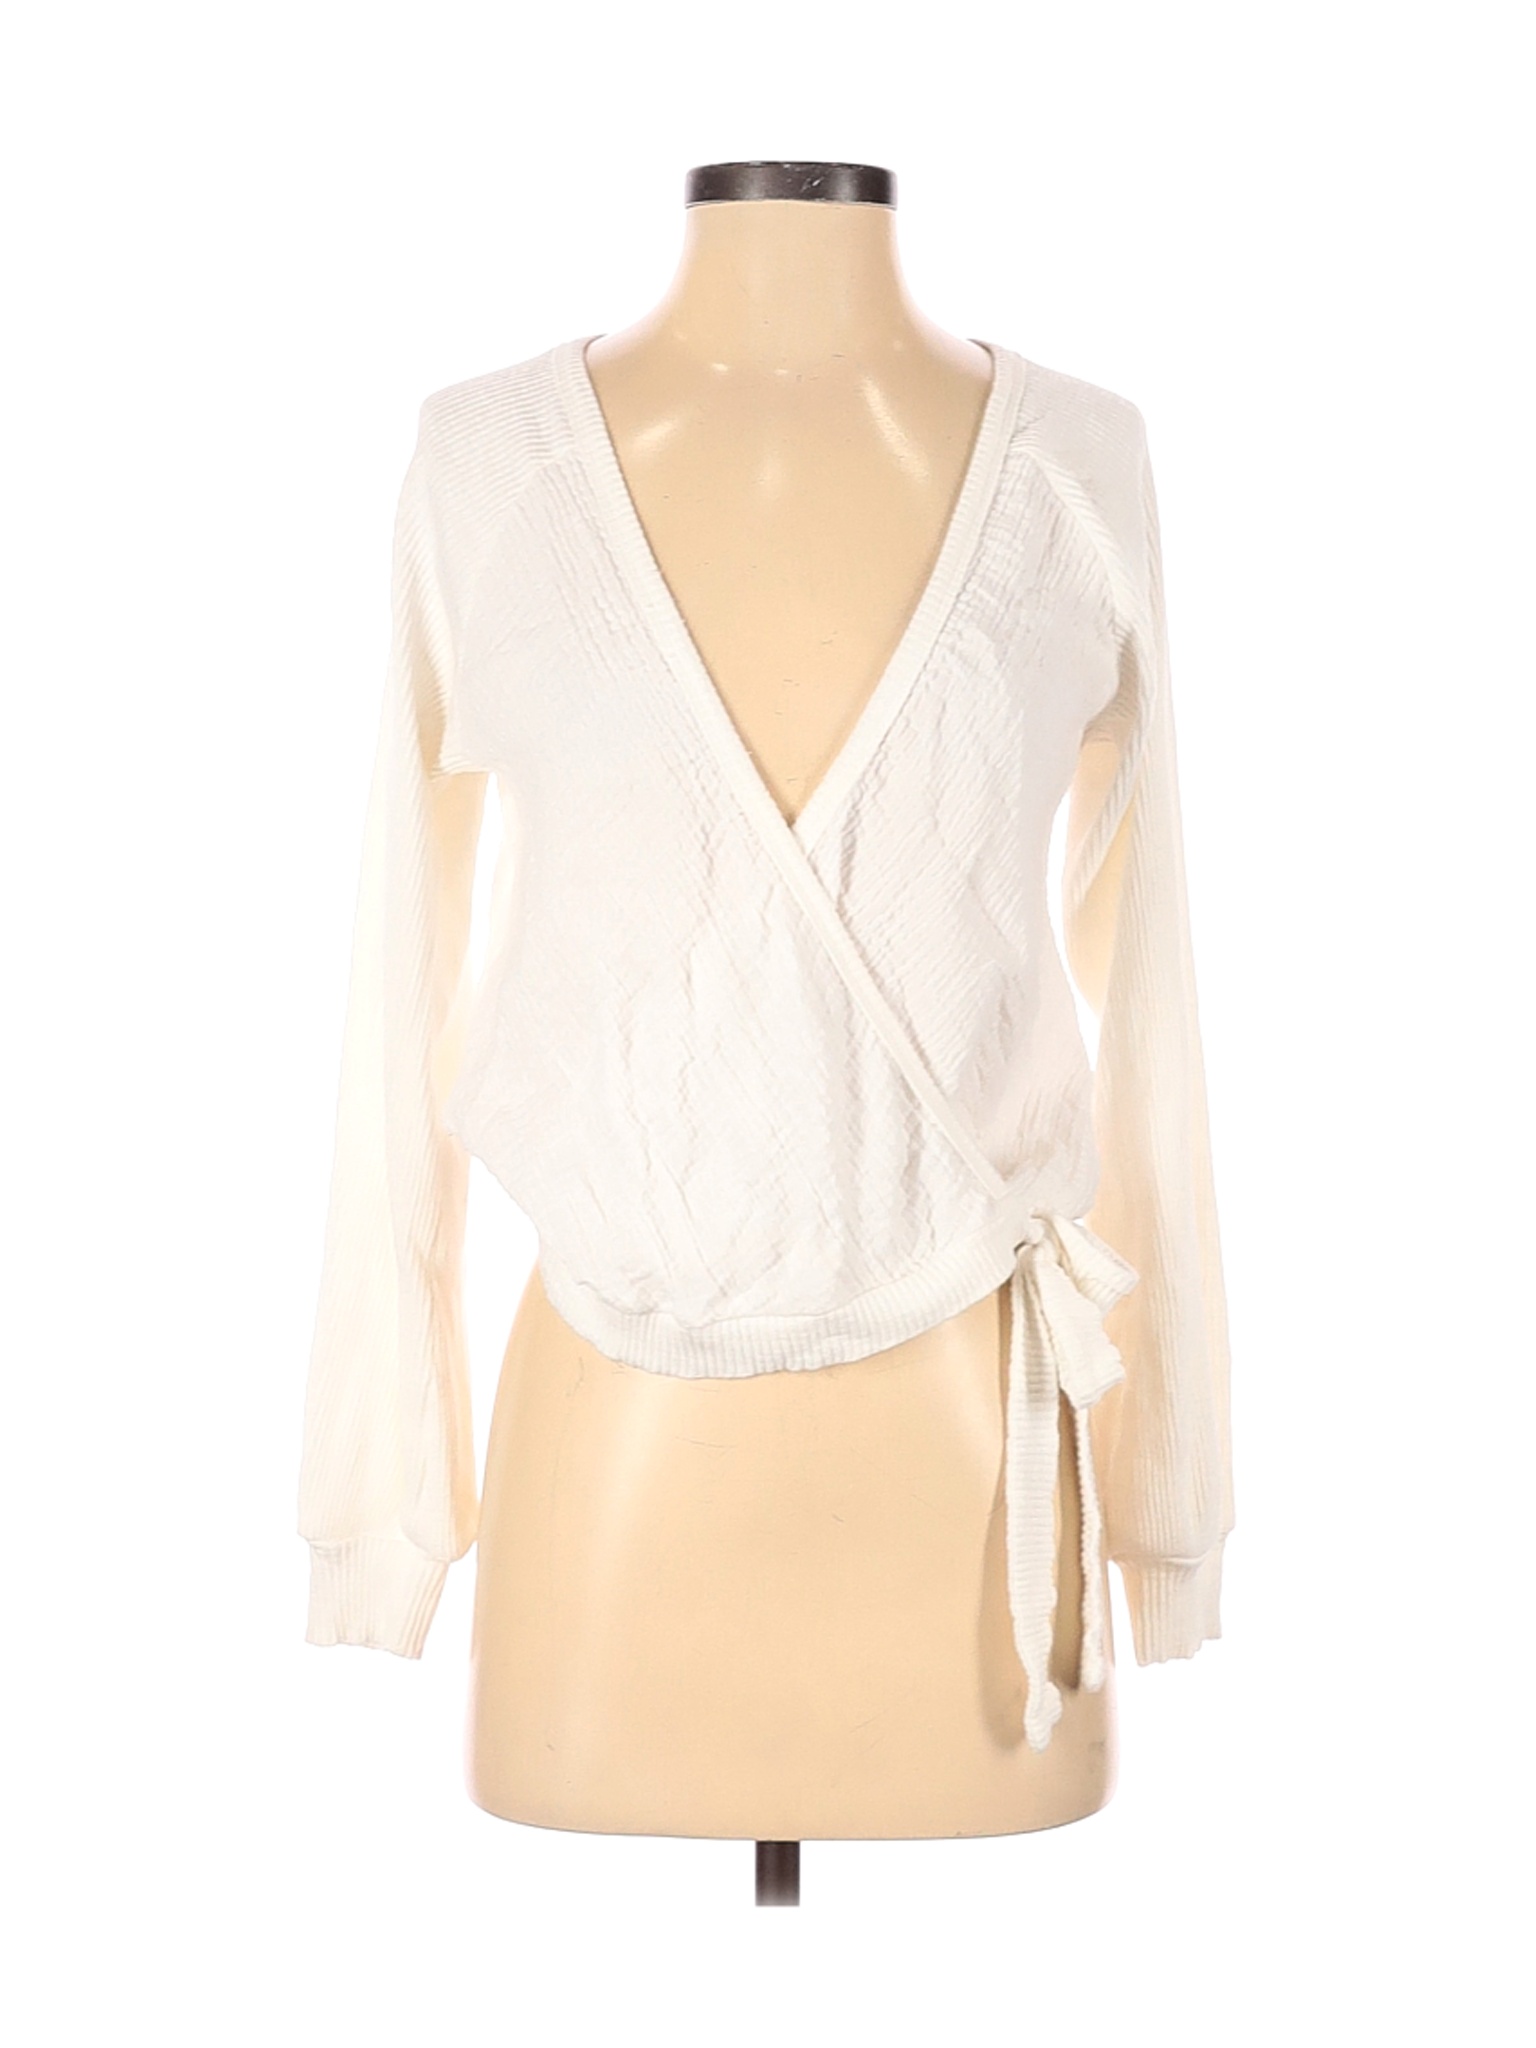 Alya Women Ivory Long Sleeve Blouse S | eBay